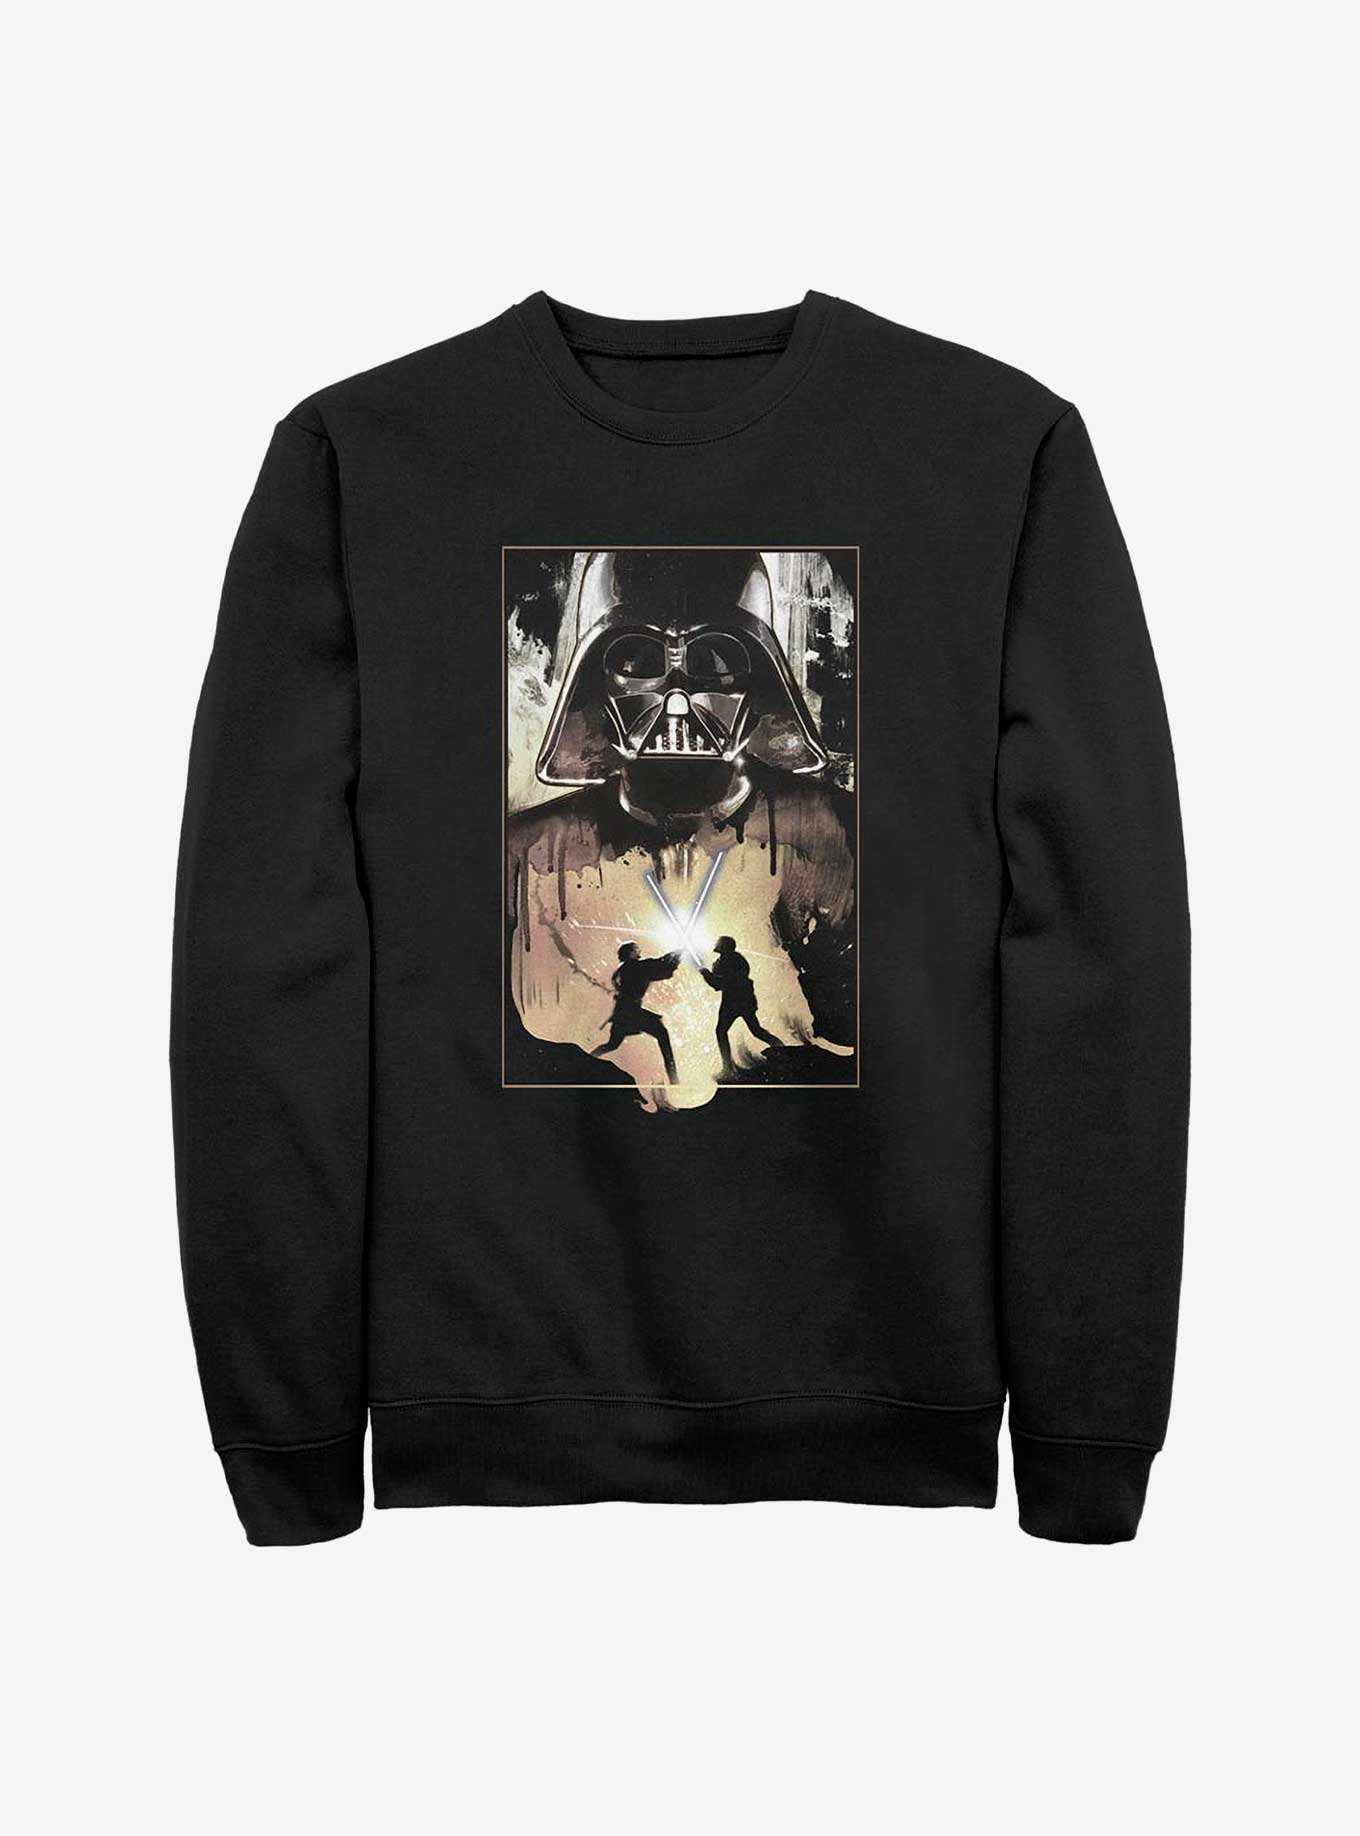 Star Wars Darth Vader Lightsaber Battle Sweatshirt, , hi-res